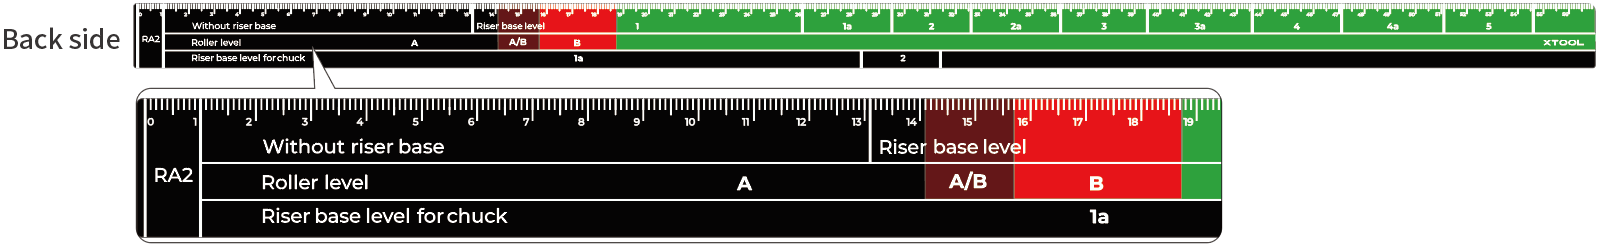 Tape_Measure_-_Marking_2.png